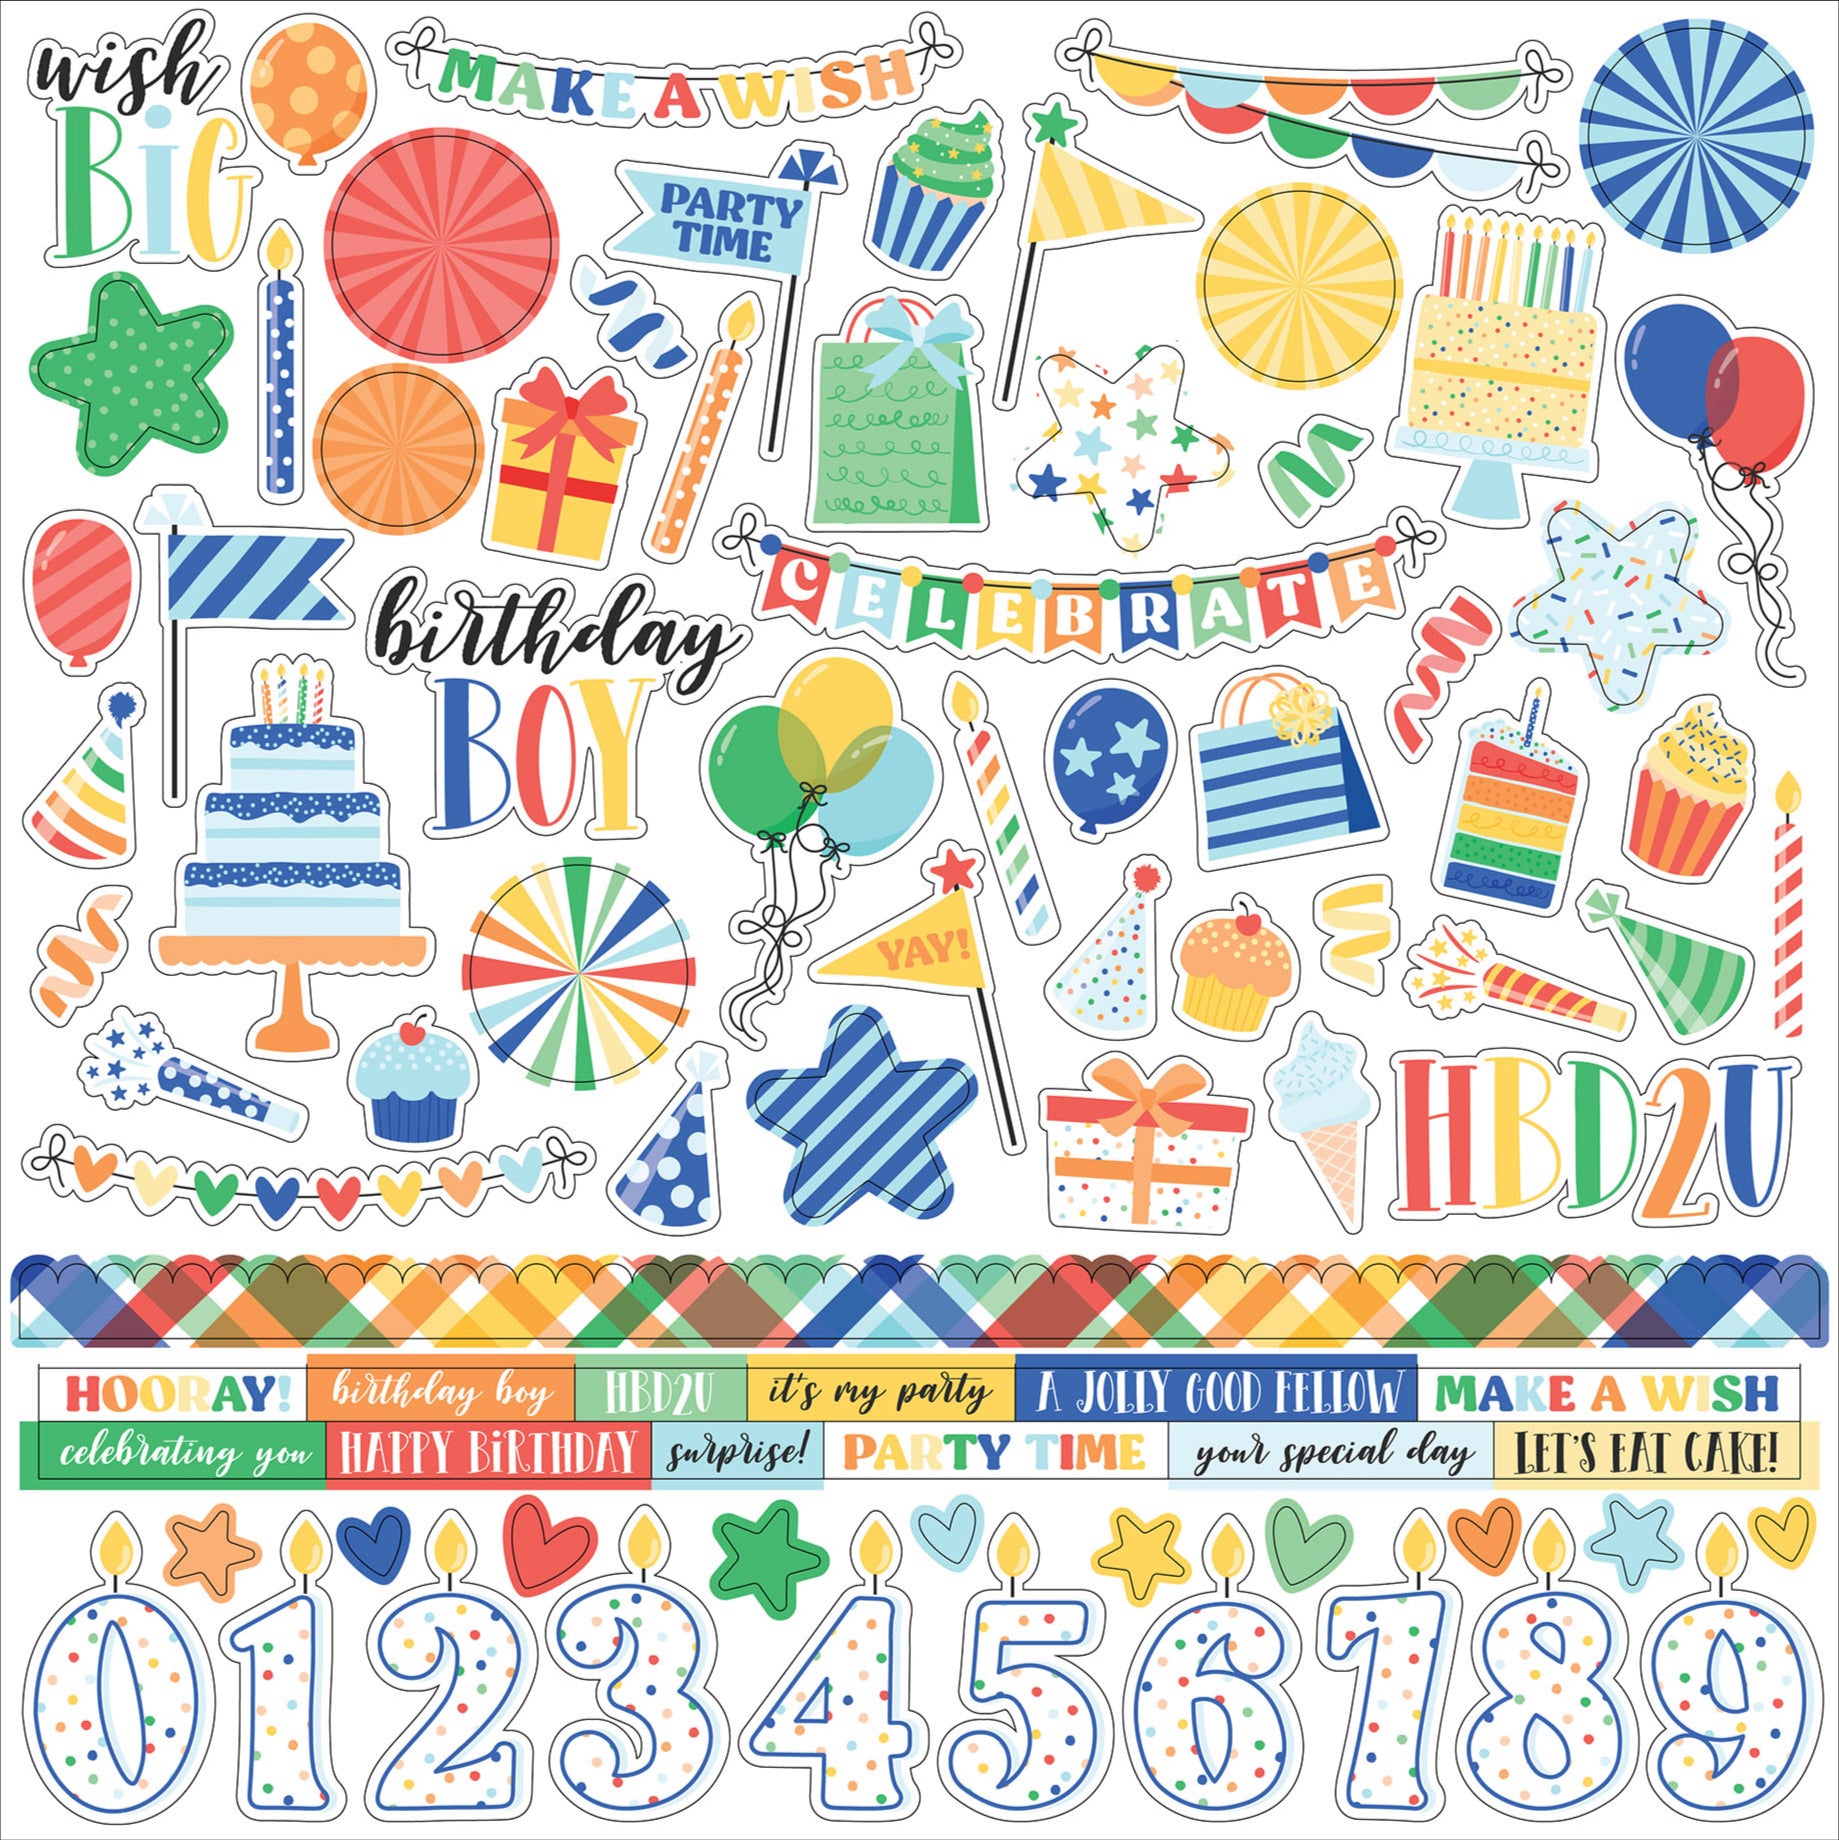 Make a Wish Birthday Boy Collection 12 x 12 Scrapbook Sticker Sheet by Echo Park Paper